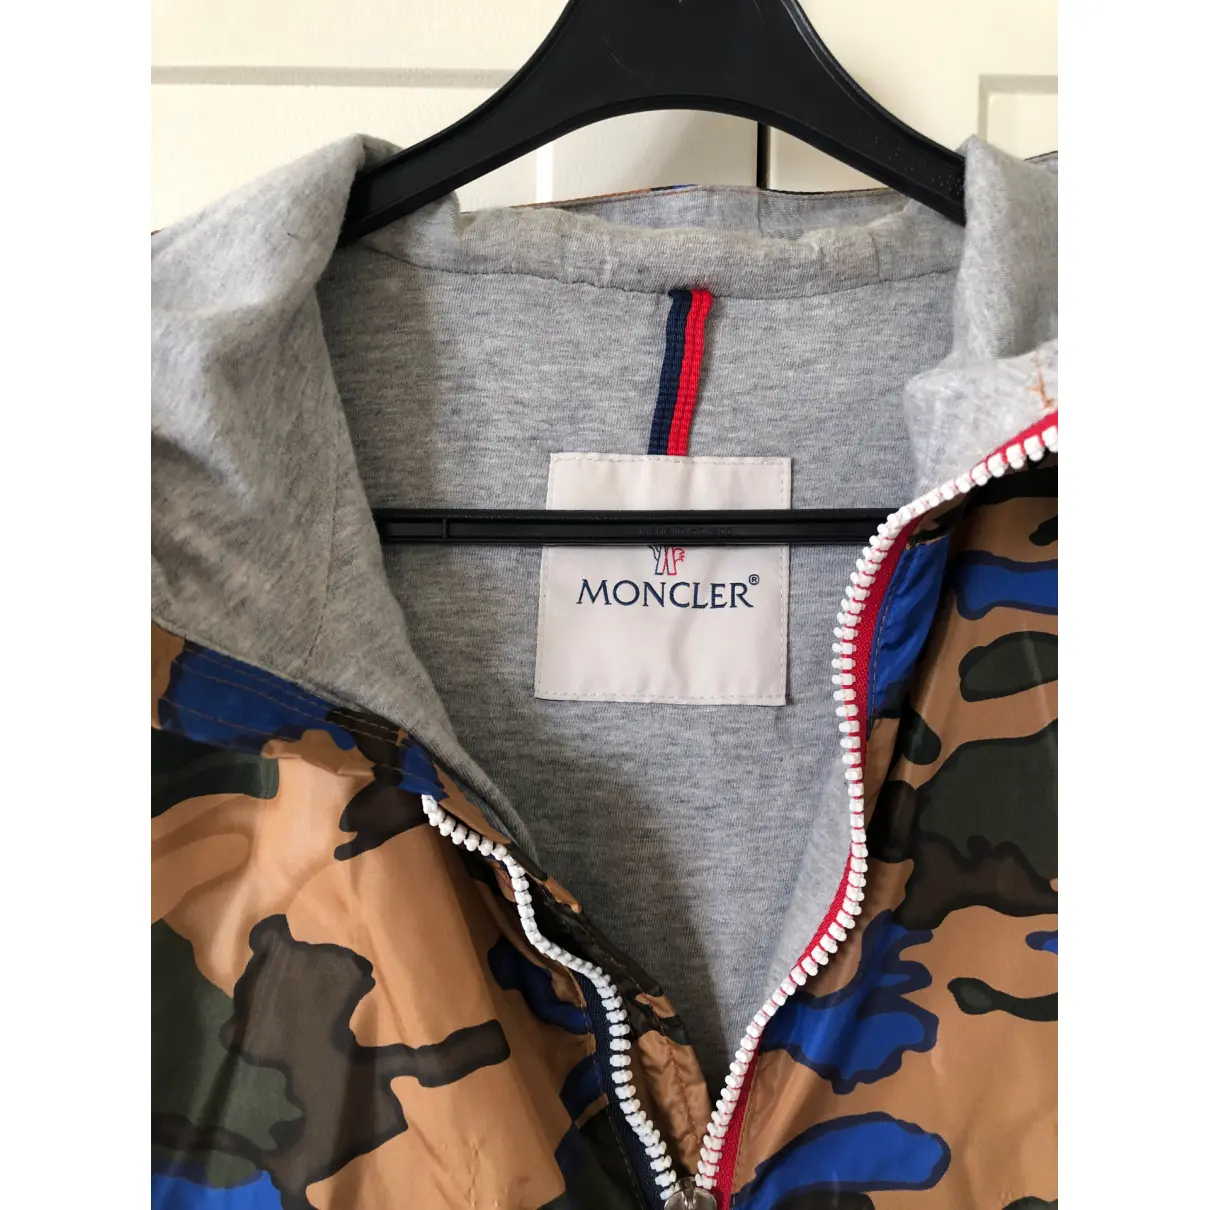 Buy Moncler Print jacket online